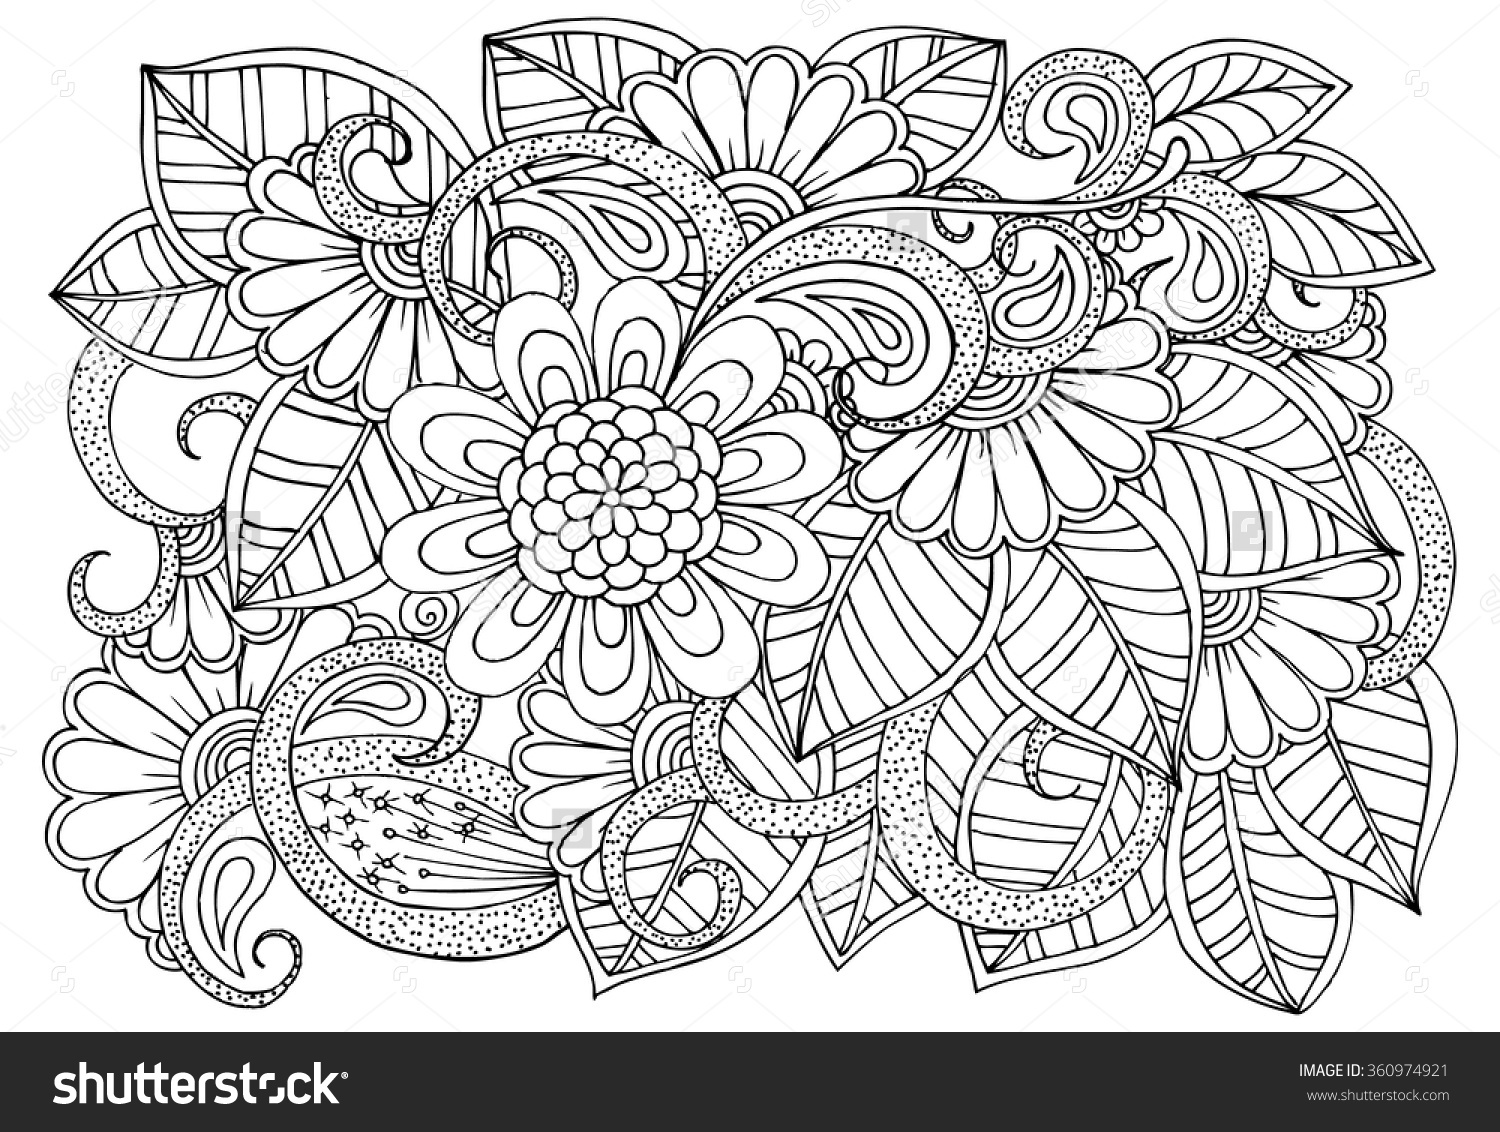 Carpet Of Leaves coloring #7, Download drawings